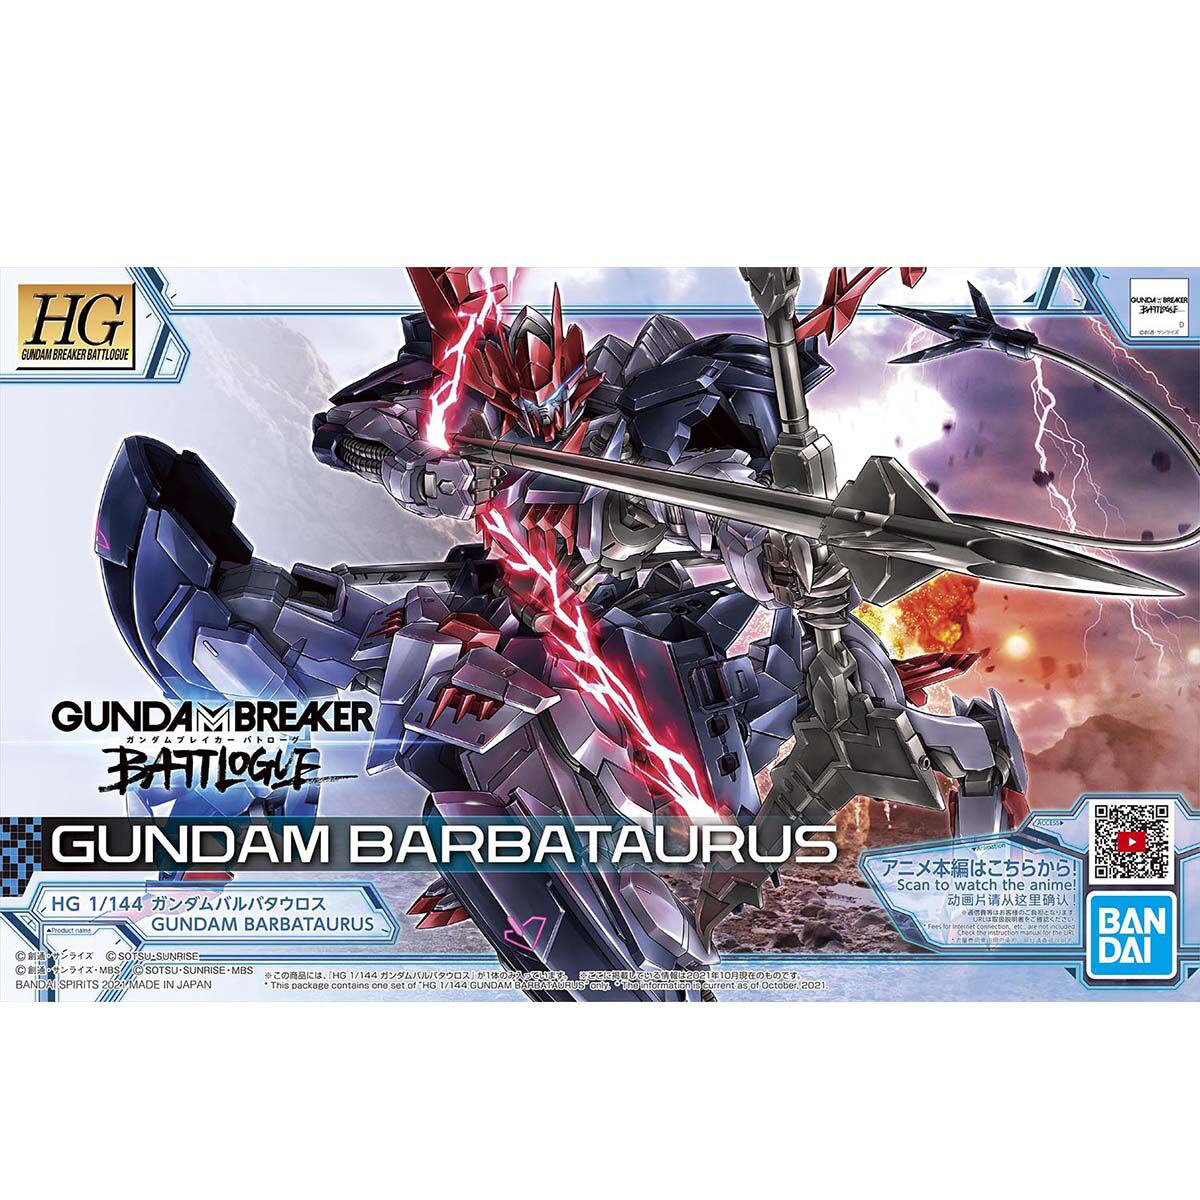 HG 1/144 Gundam Barbataurus (Gundam Breaker Battlogue)